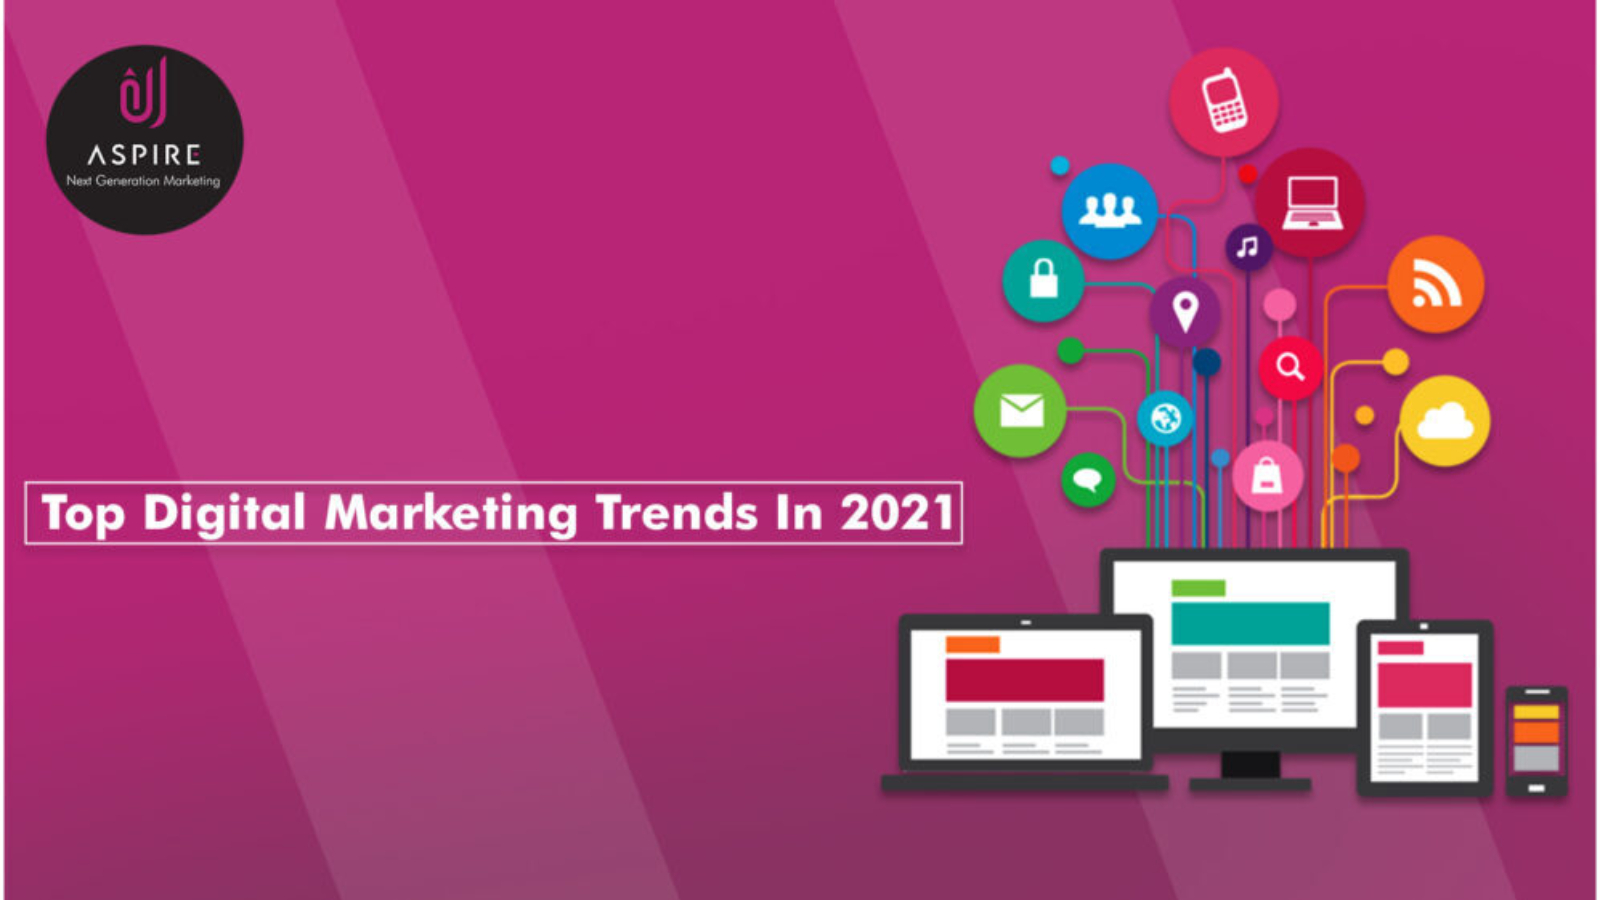 Digital marketing trends in 2021